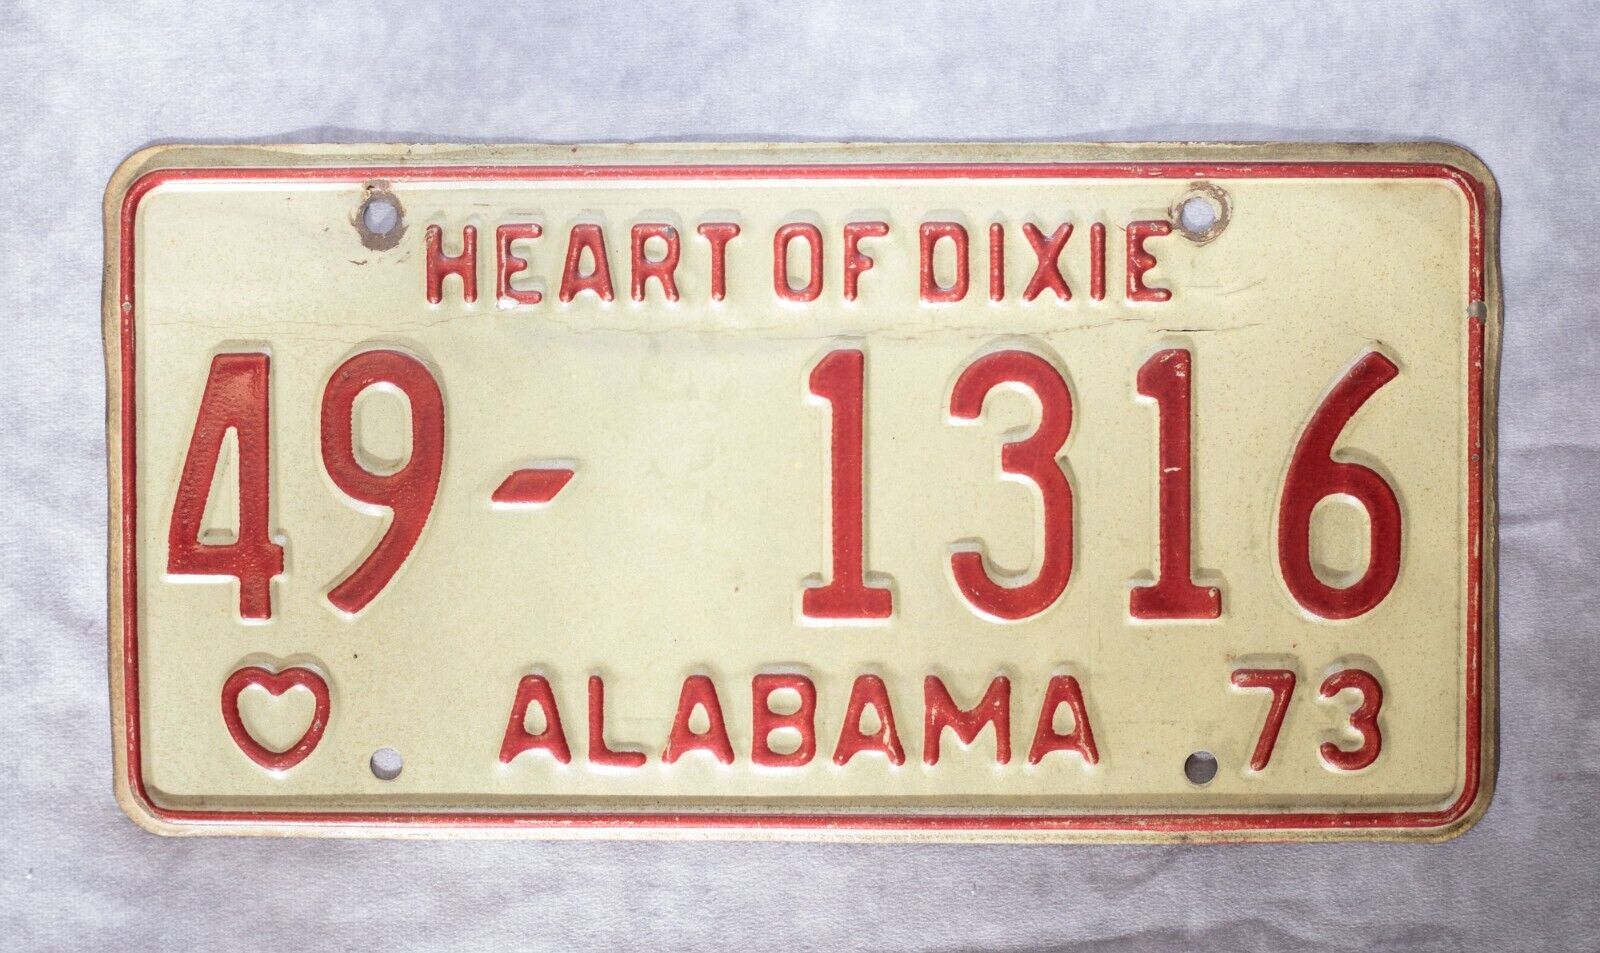 Vintage Marion County, Alabama license plate 1973 /49-1316